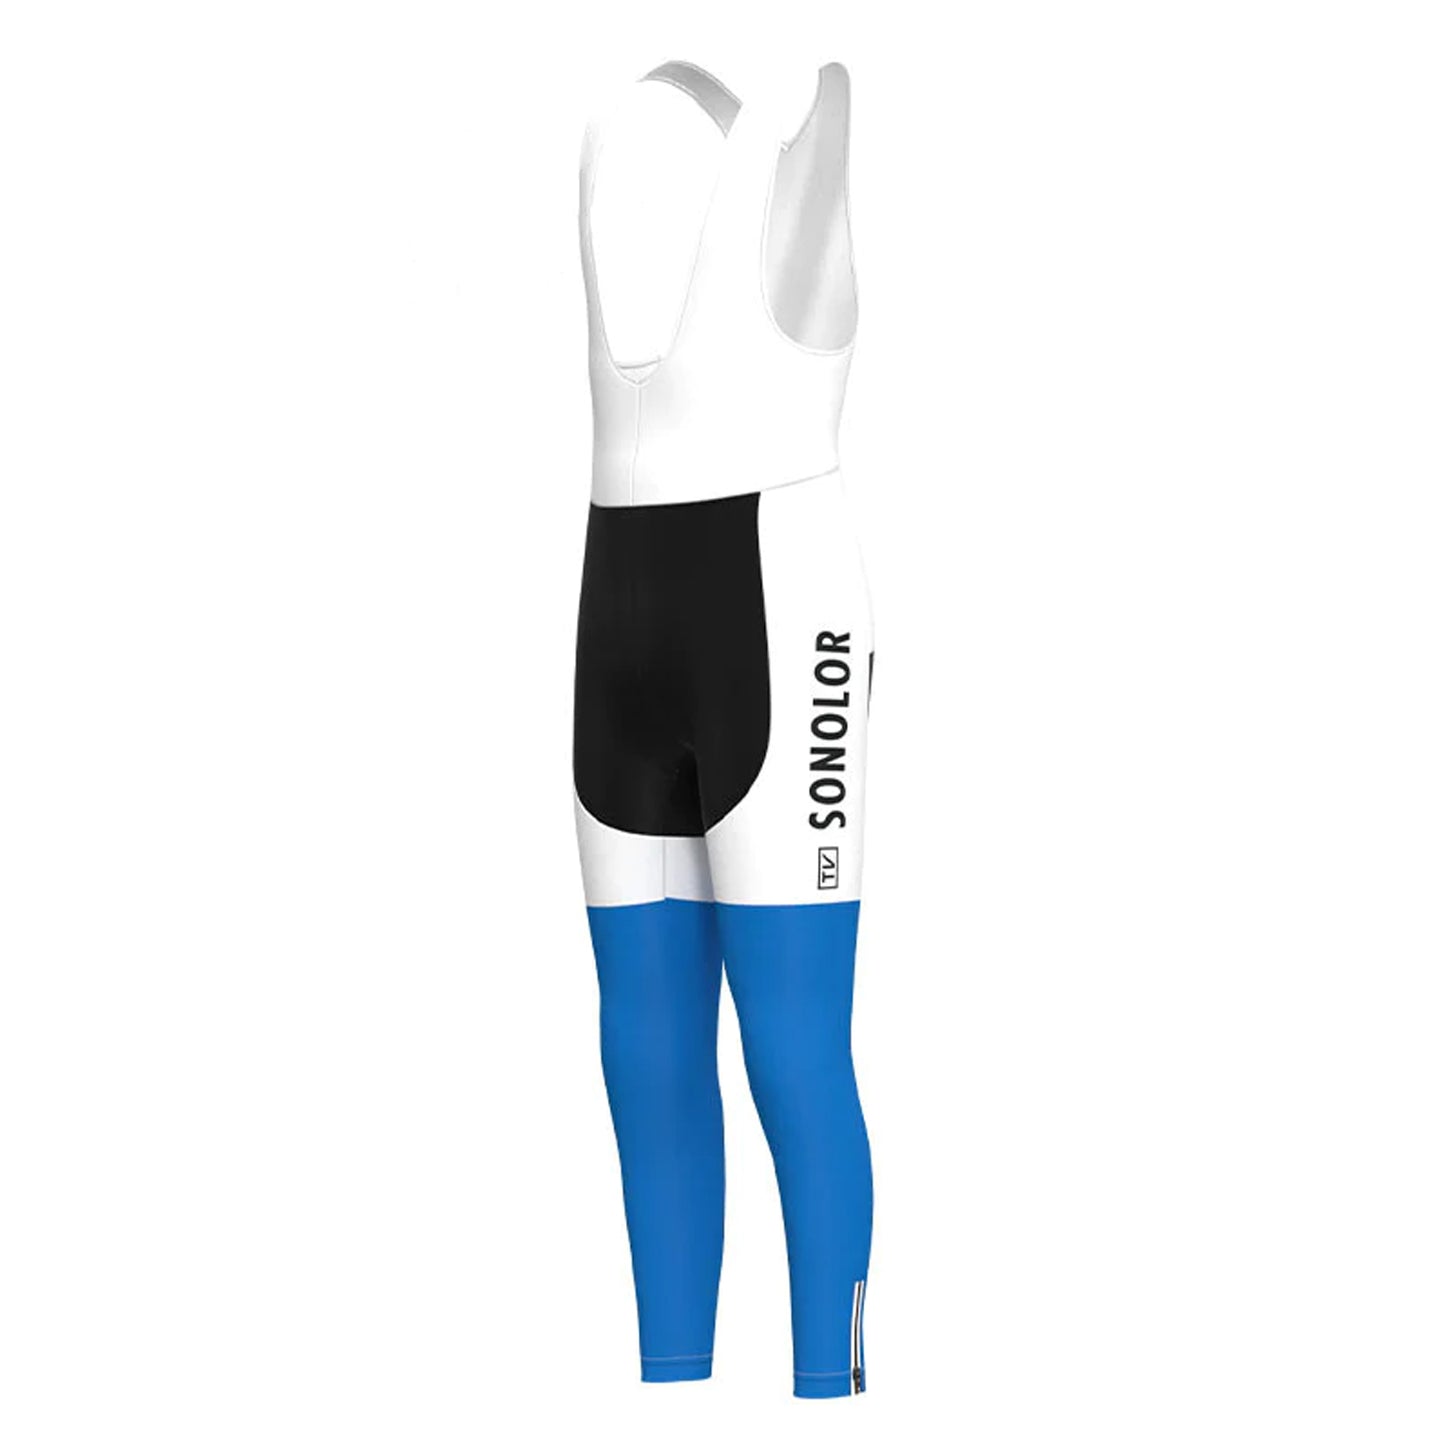 Sonolor Gitane Long Sleeve Cycling Jersey Matching Set